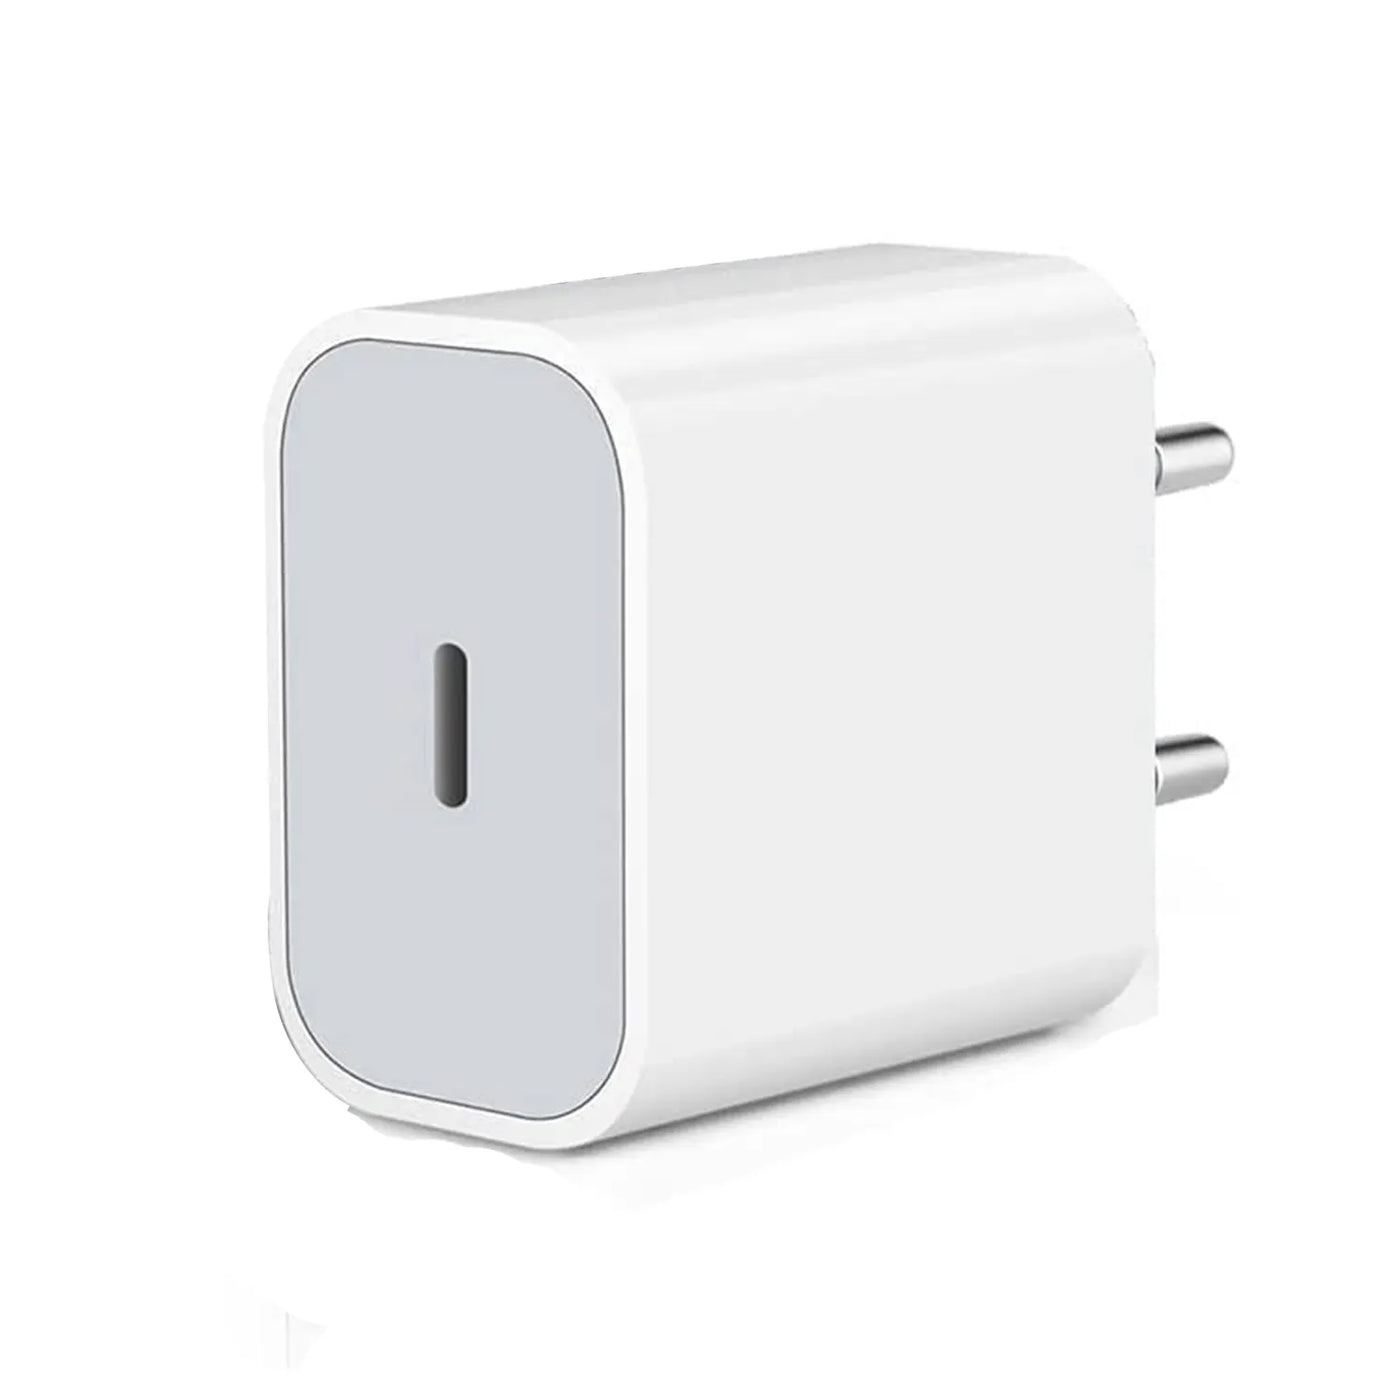 Muvit 20W USB C Power Adapter For iPhone, iPad, MacBook